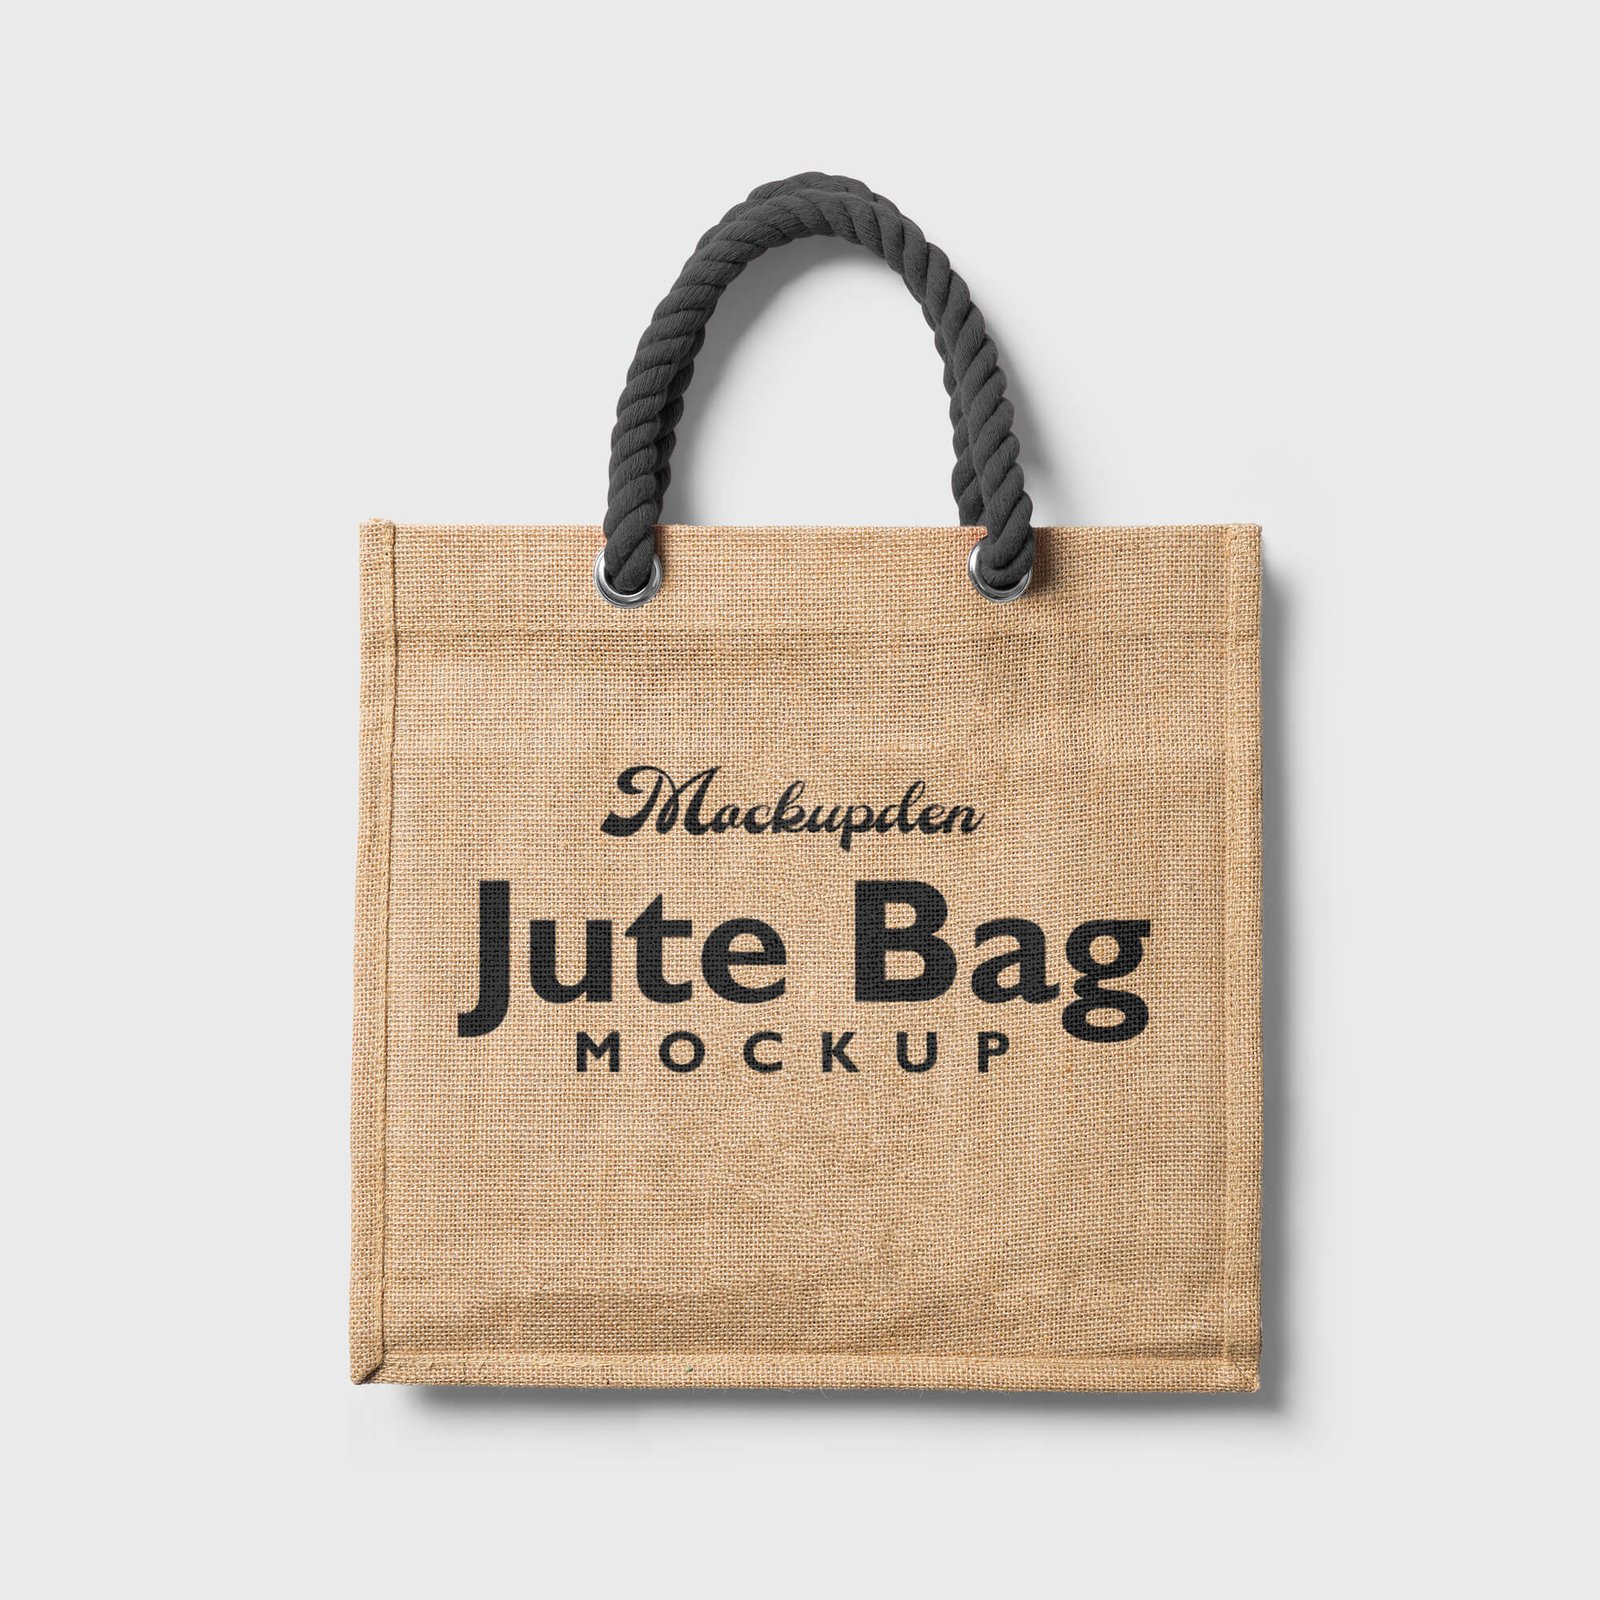 Design Free Jute Bag Mockup PSD Template